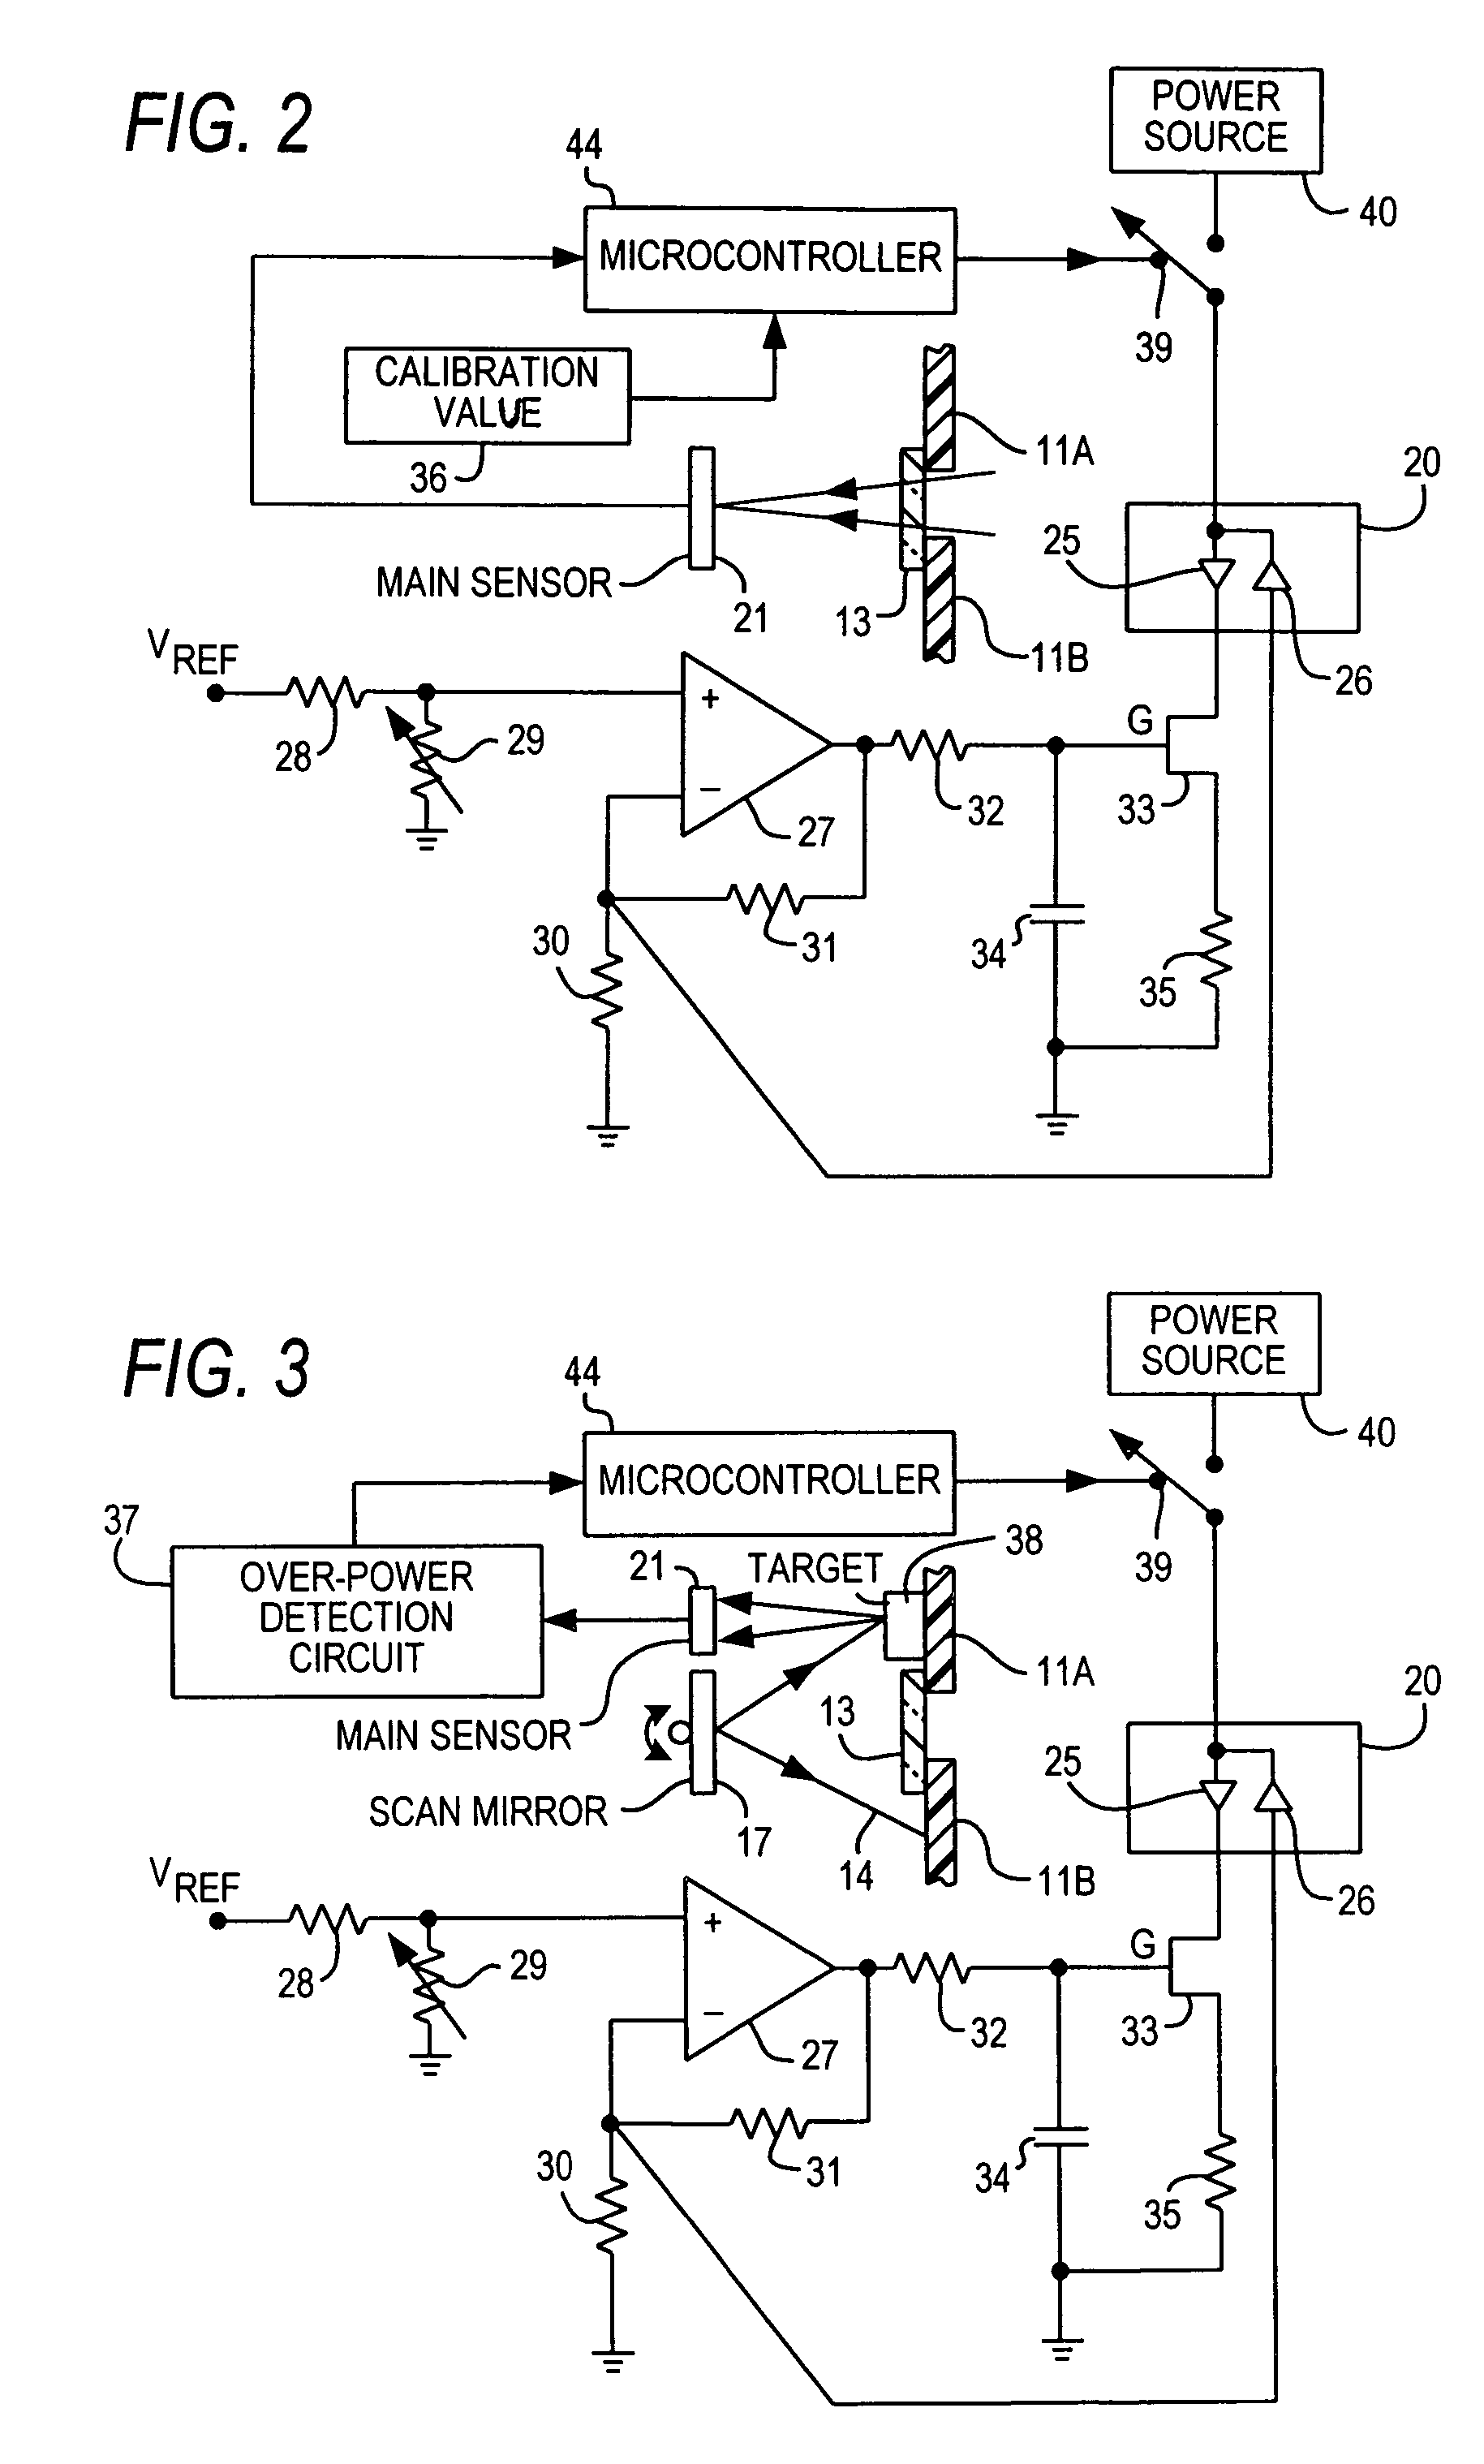 Laser power control arrangements in electro-optical readers